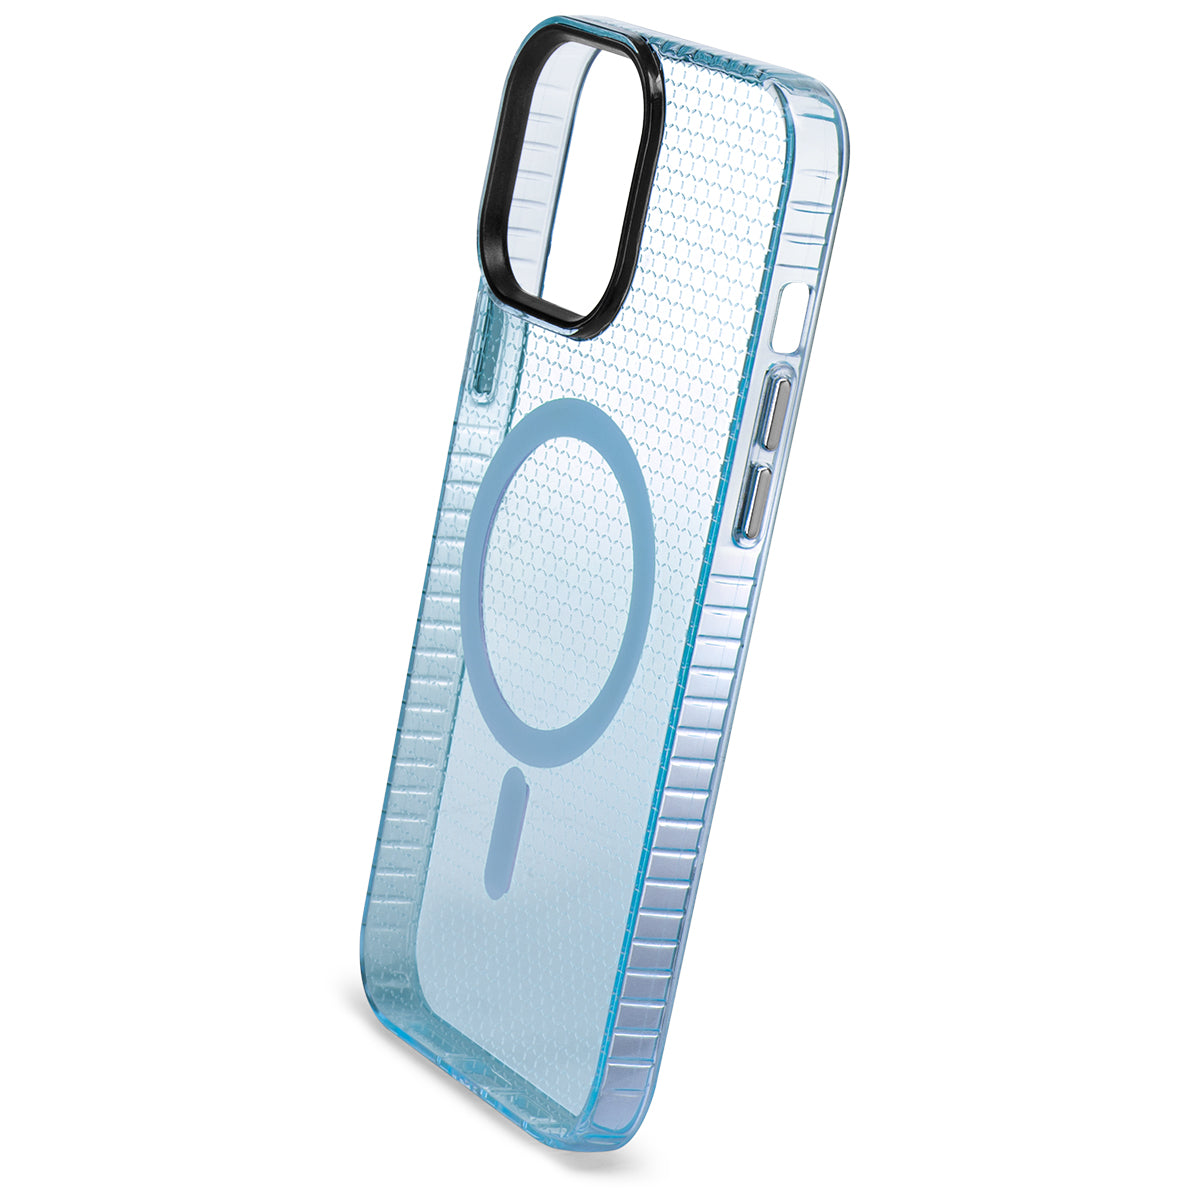 ShOx - iPhone 15 Plus/ 14 Plus Blue w/ MagSafe Cases